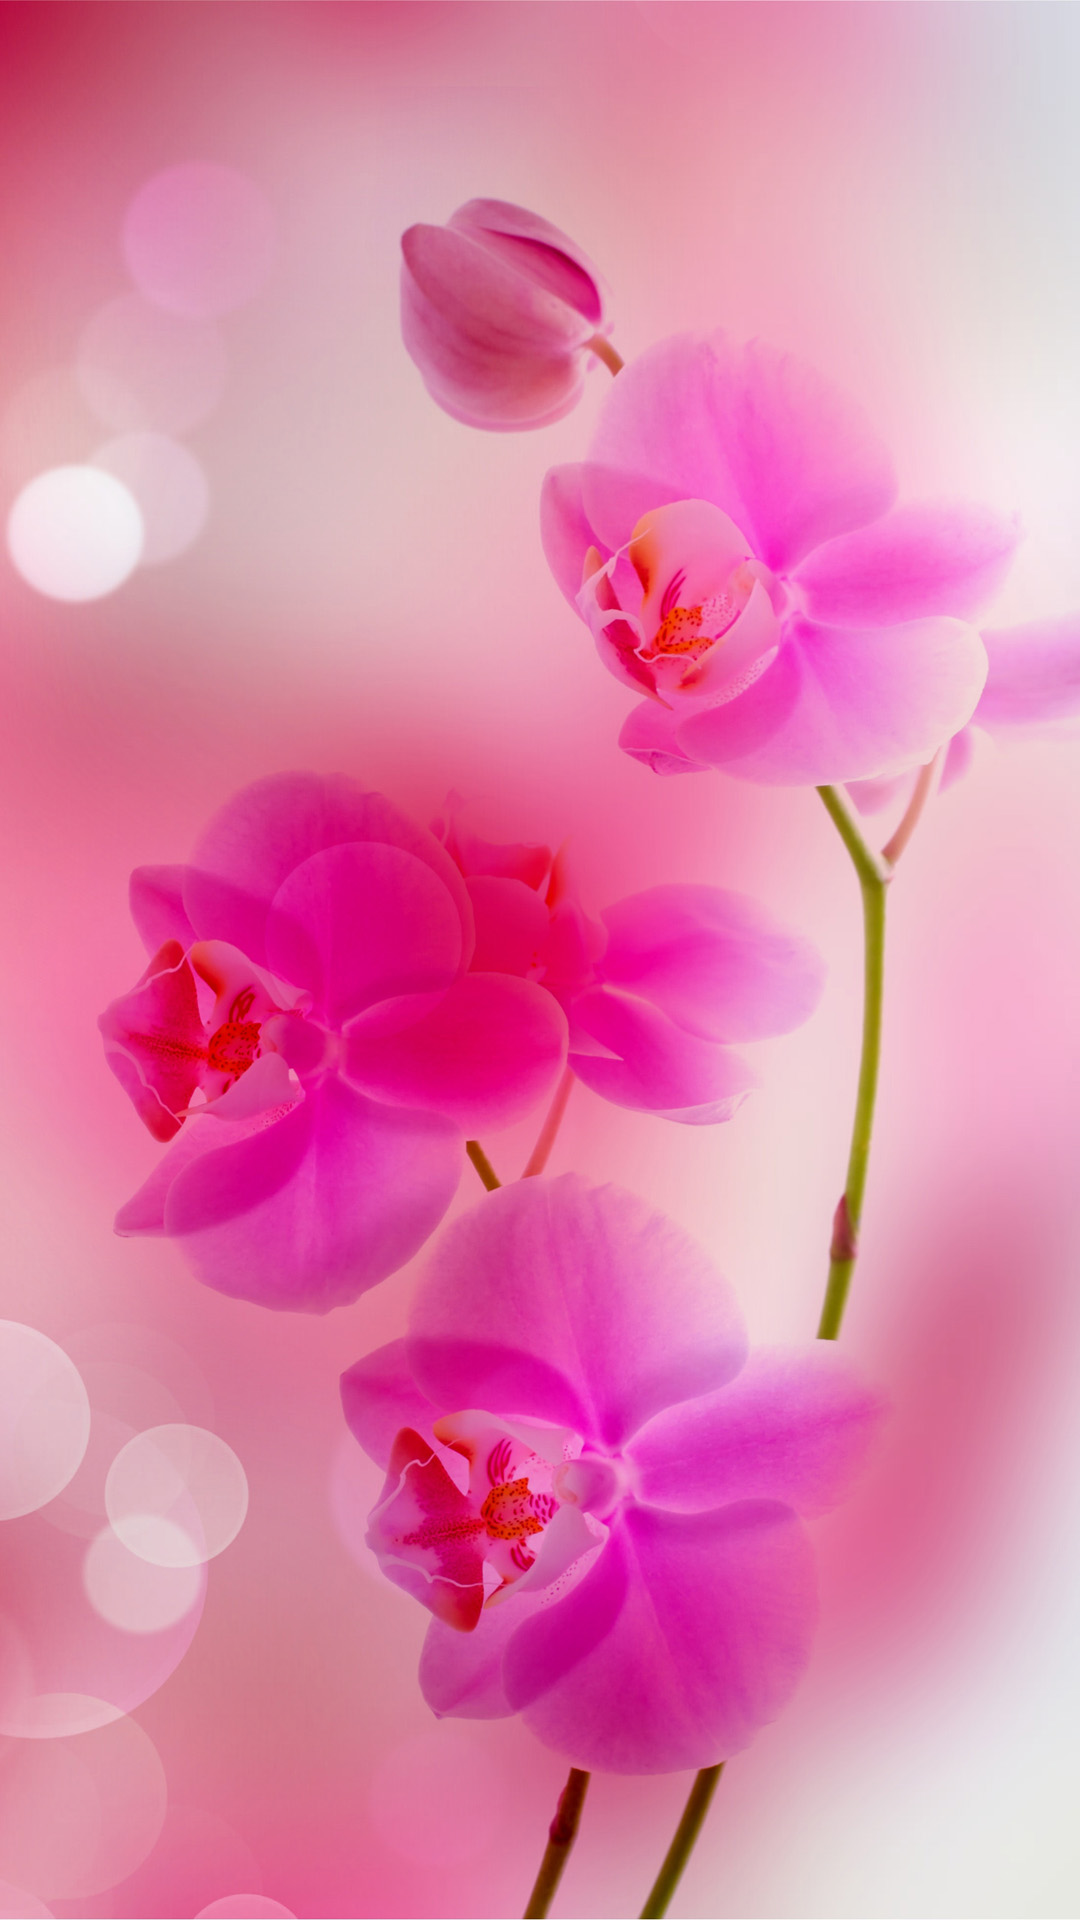 Flower | iPhone 6 Plus Wallpapers HD